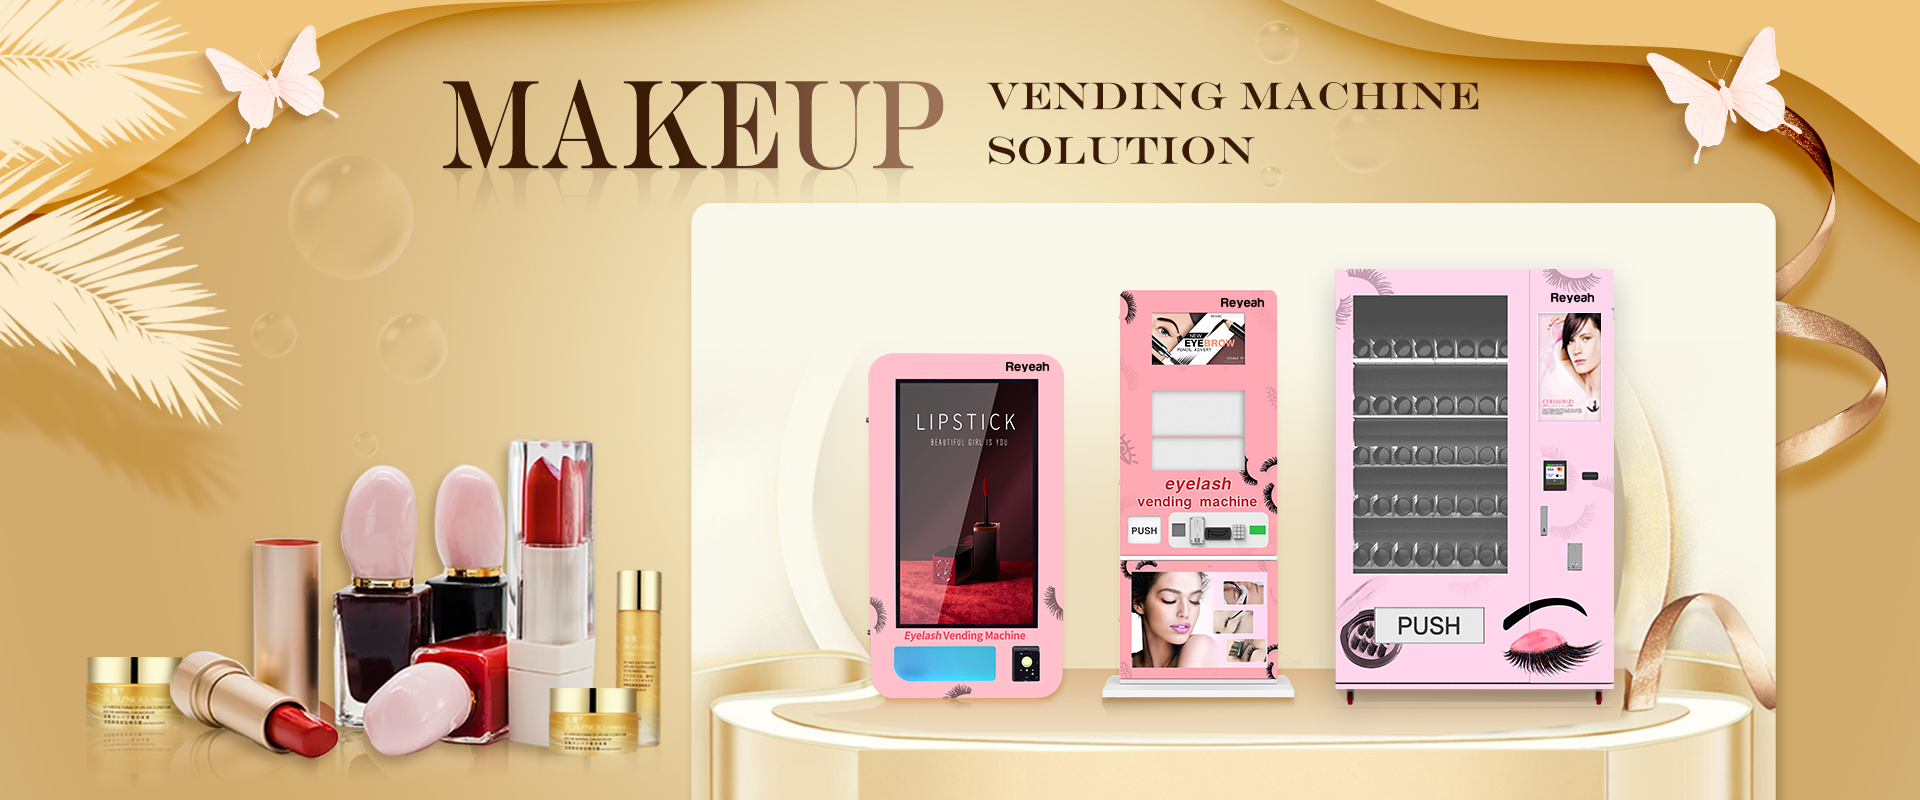 Makeup Vending Machines Solution